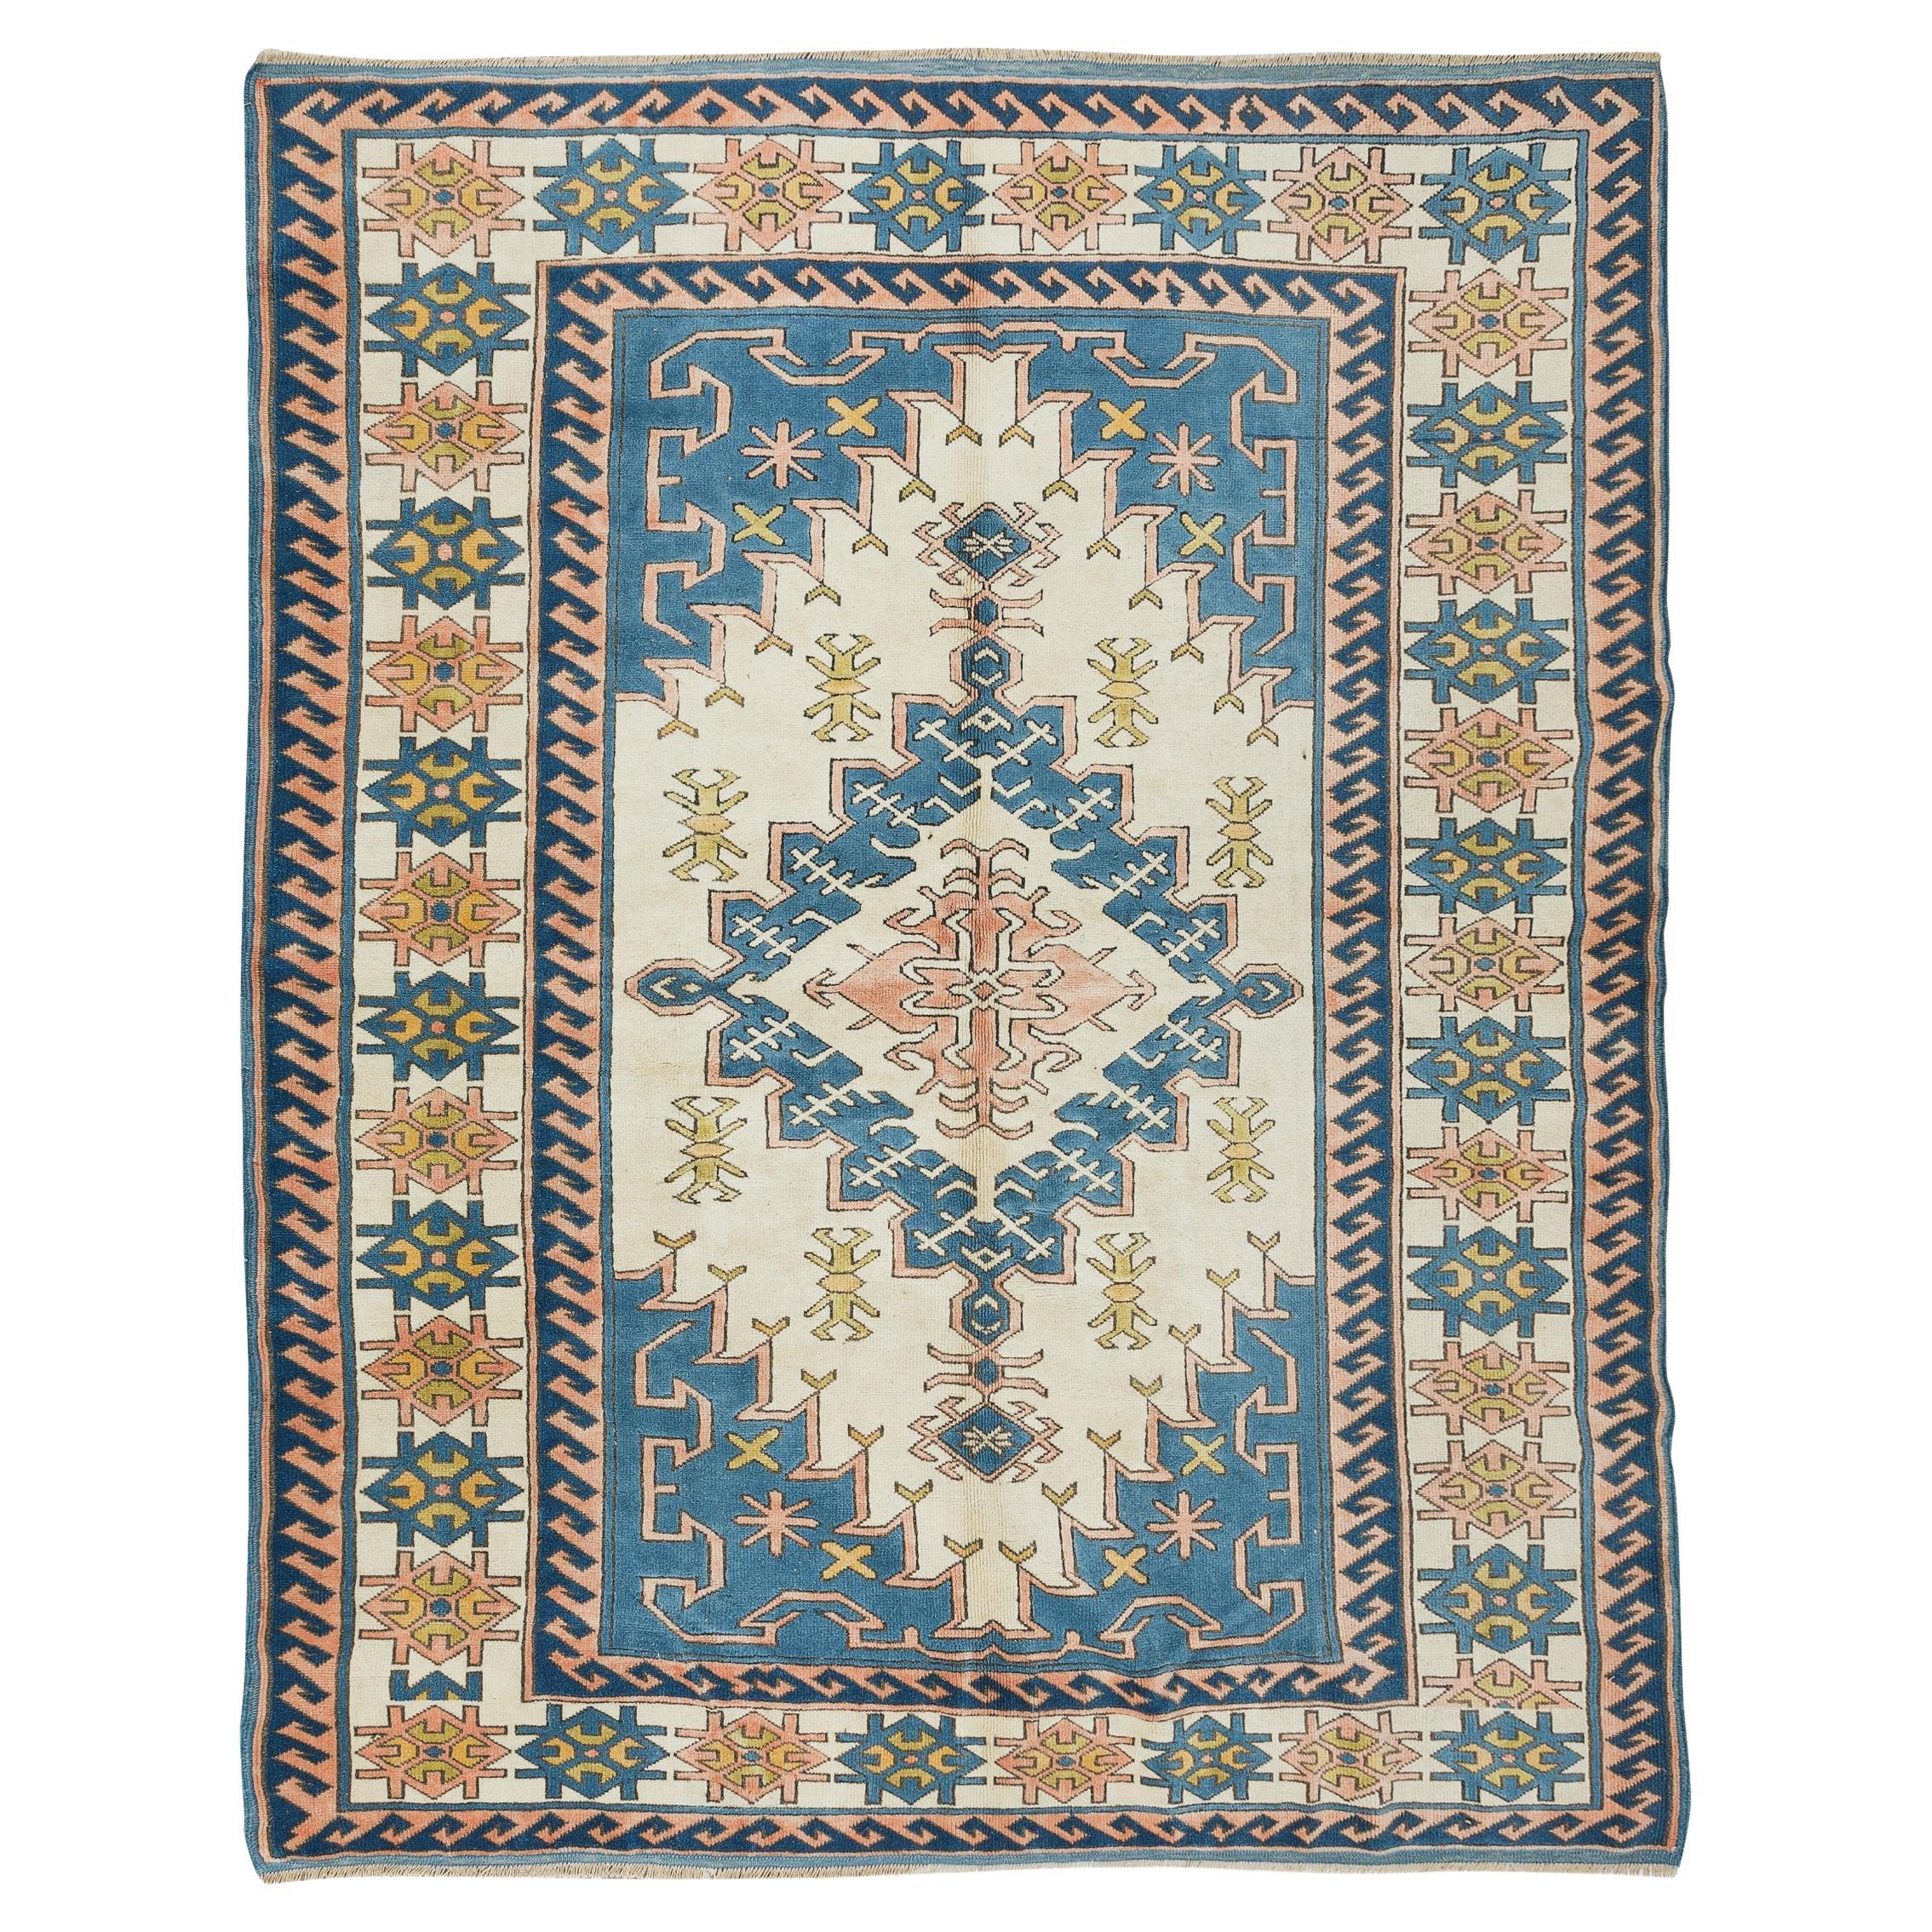 6.9x8.8 Ft Handmade One-of-a-Kind Rug, Geometric Vintage Anatolian Wool Carpet